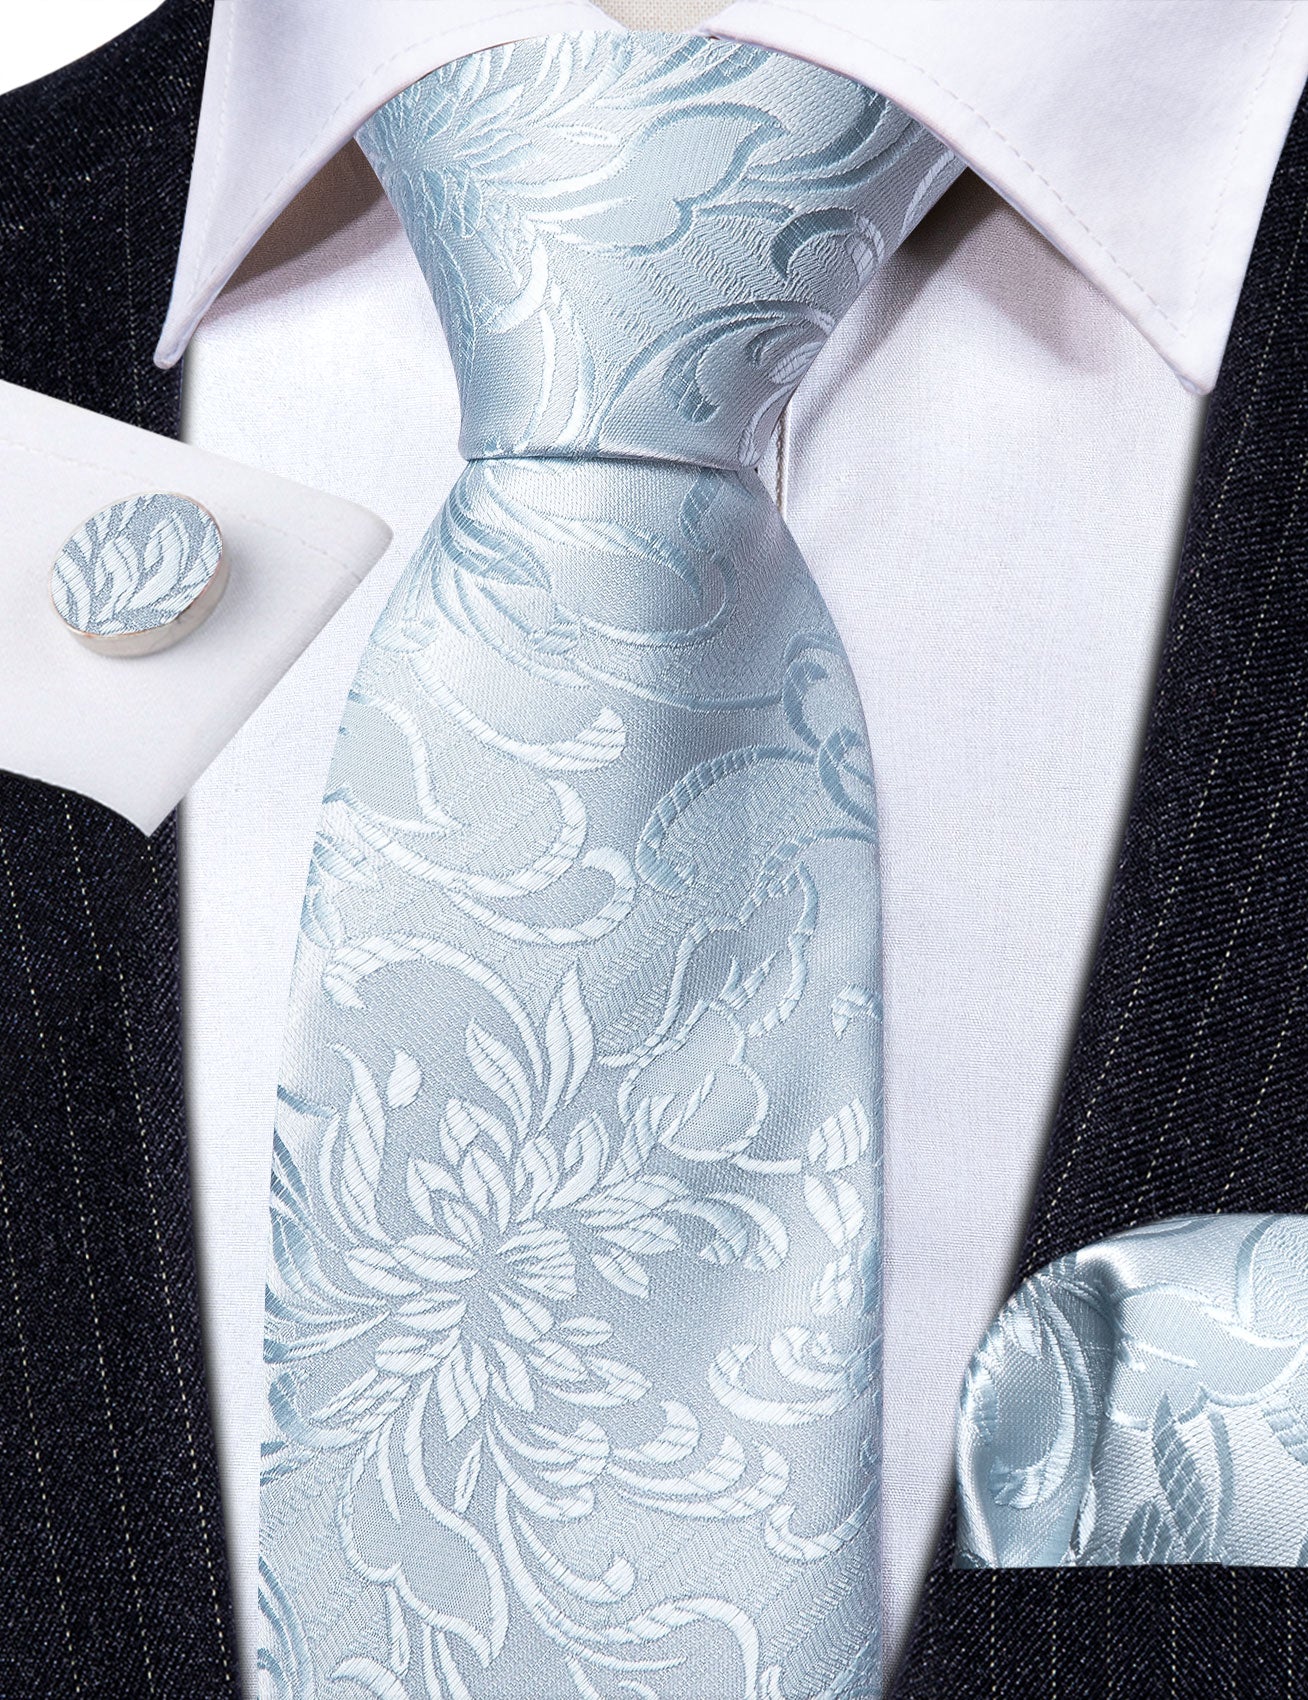 White Peony Flower Silk Tie Handkerchief Cufflinks Set